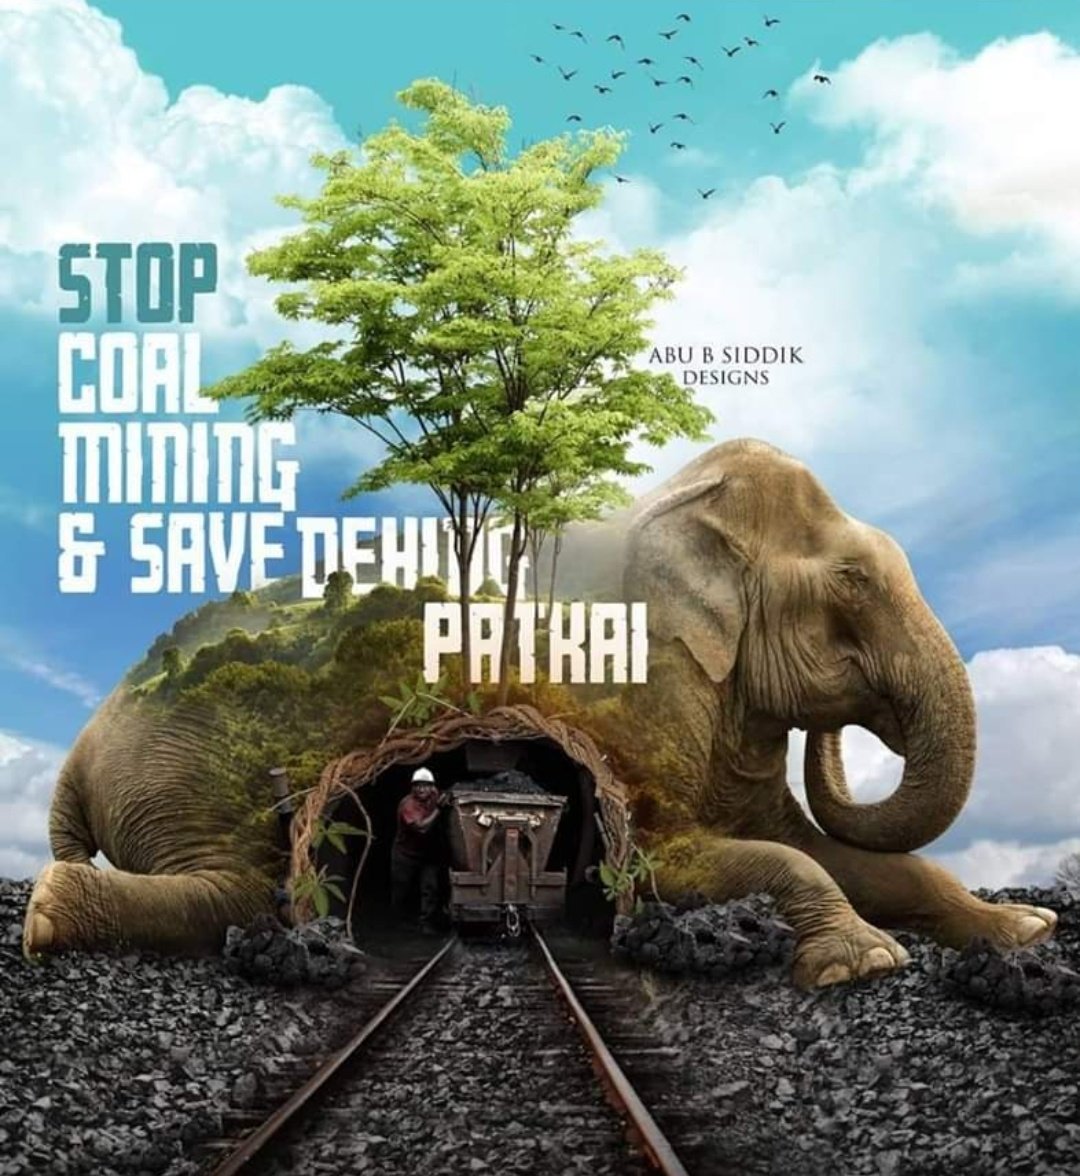 #iamdehingpatkai 
#SaveDahingPatkai 
#StopCoalMiningProject